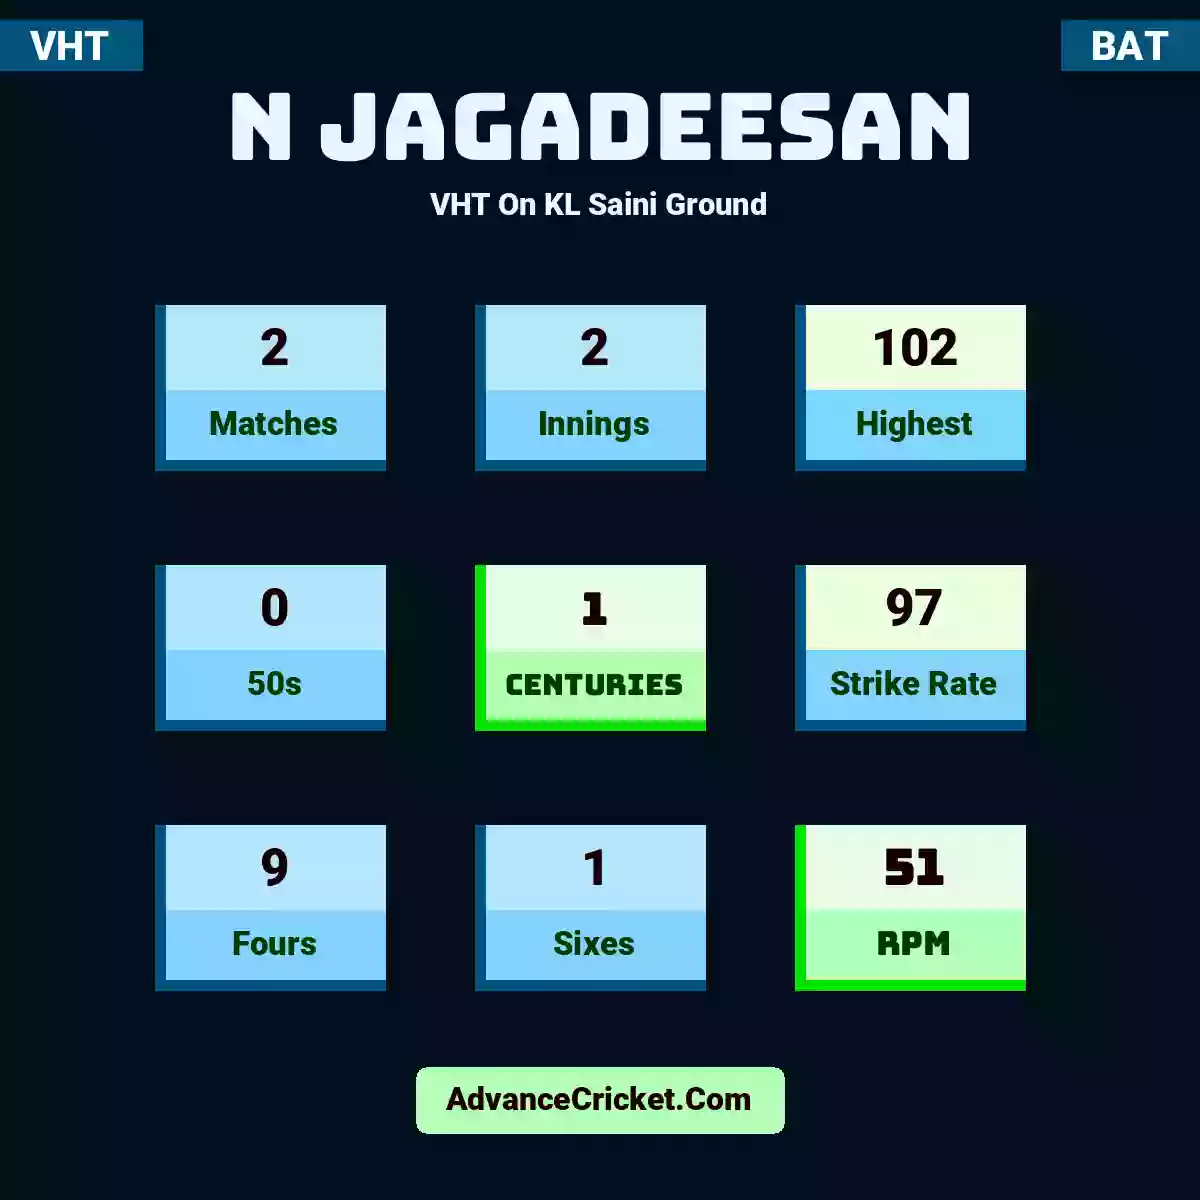 N Jagadeesan VHT  On KL Saini Ground, N Jagadeesan played 2 matches, scored 102 runs as highest, 0 half-centuries, and 1 centuries, with a strike rate of 97. N.Jagadeesan hit 9 fours and 1 sixes, with an RPM of 51.